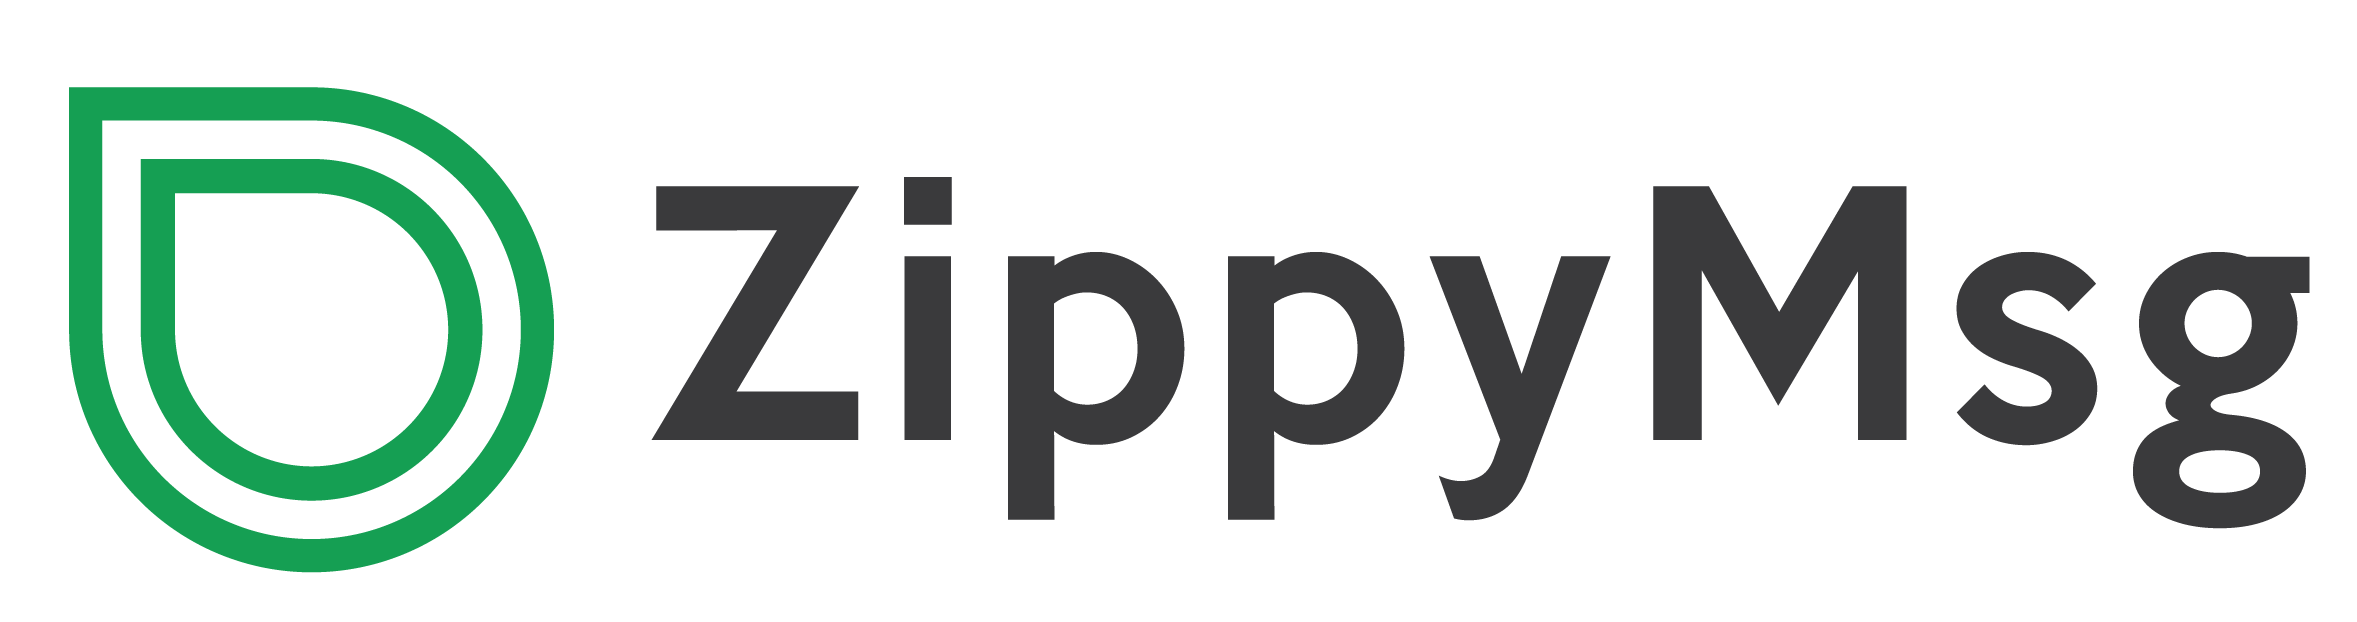 zippymsg logo